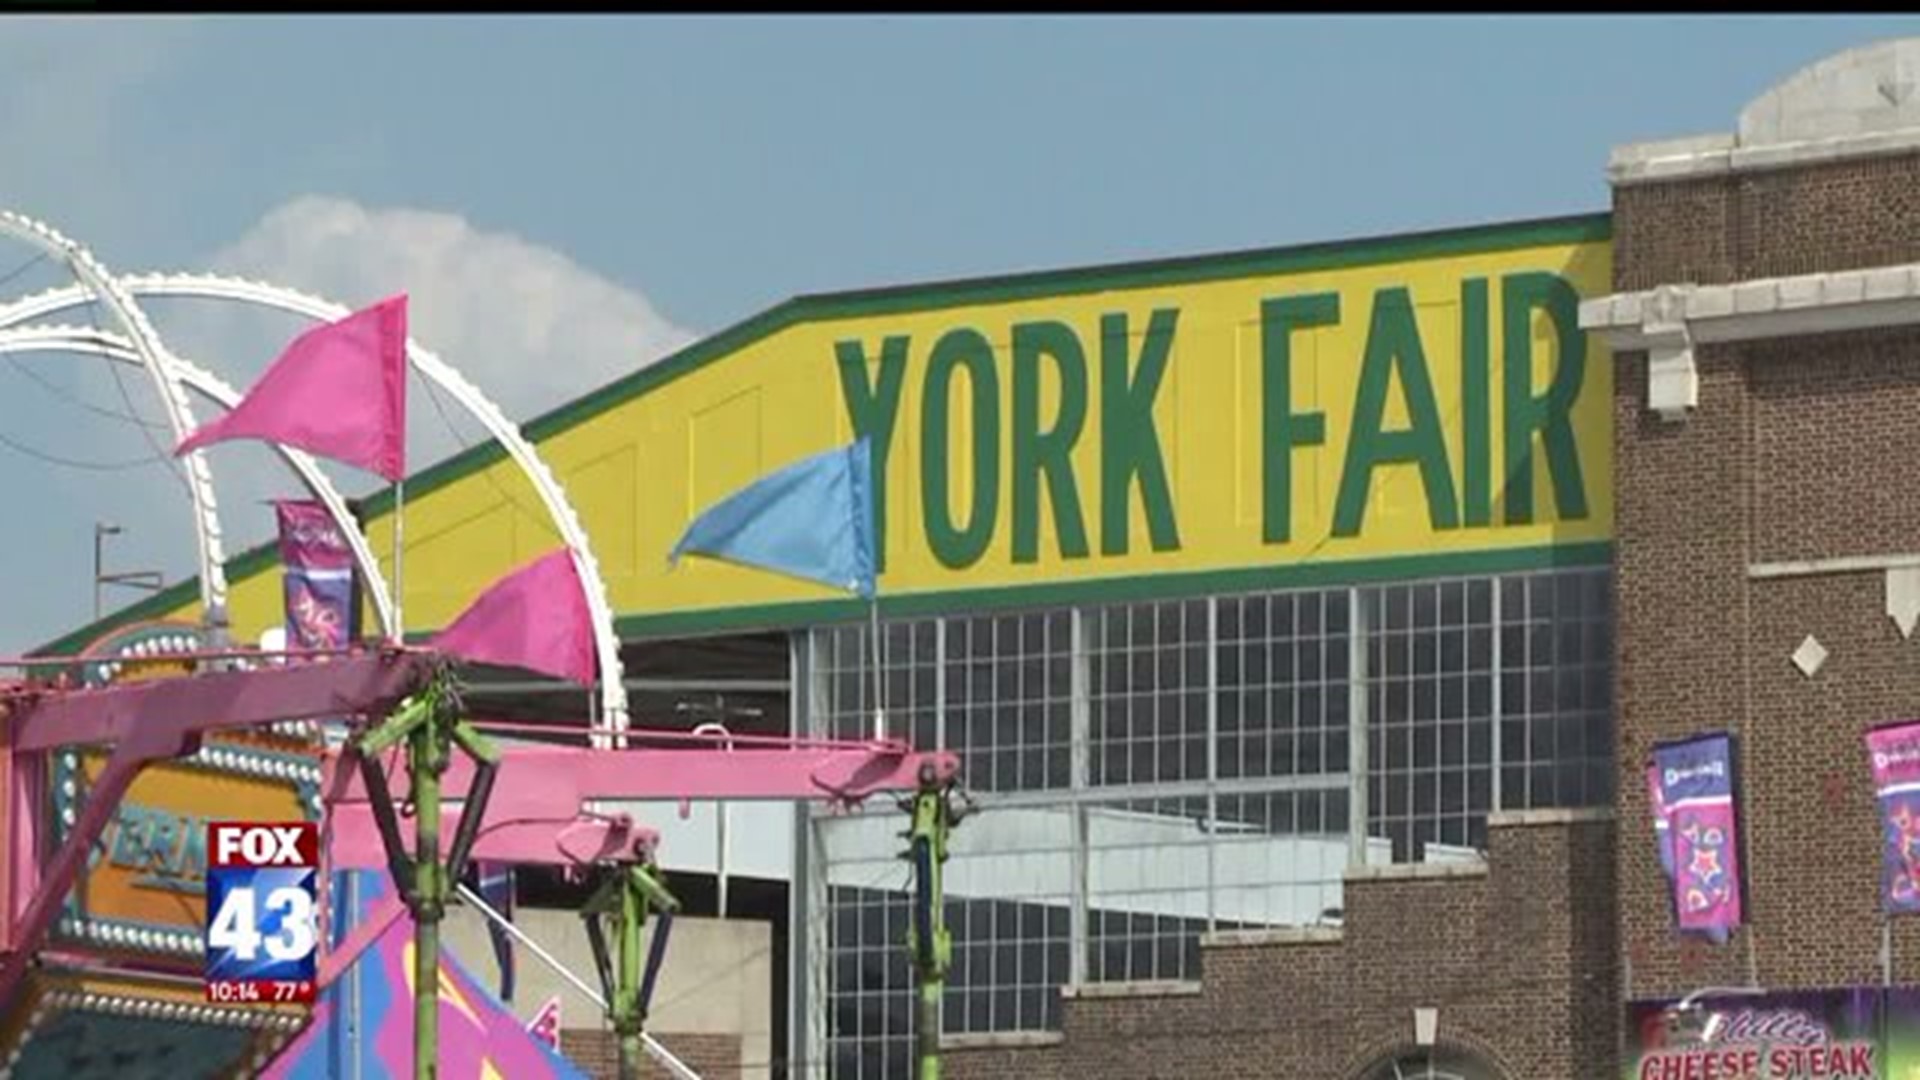 The York Fair Gets Set to Begin